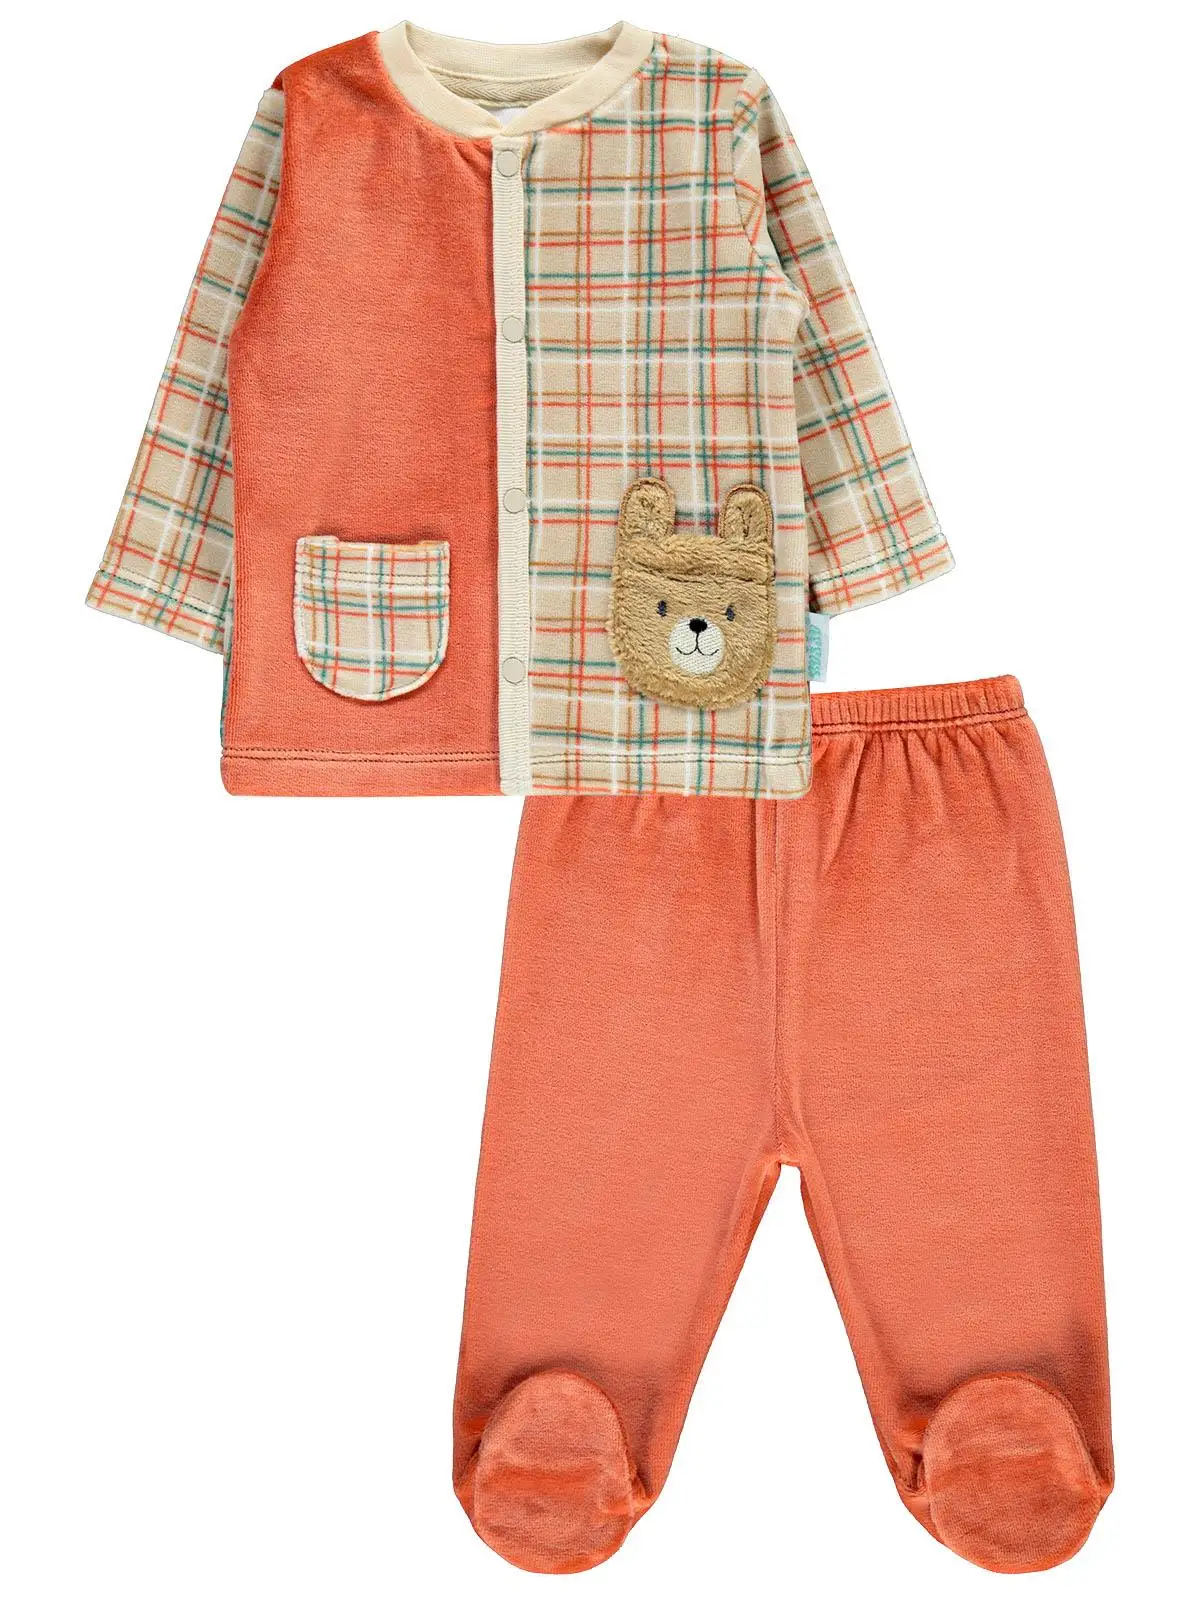 

Kujju Baby Boy Pajamas Set 3-6 Months Orange Color 80% Cotton 20% Polyester Long Sleeve